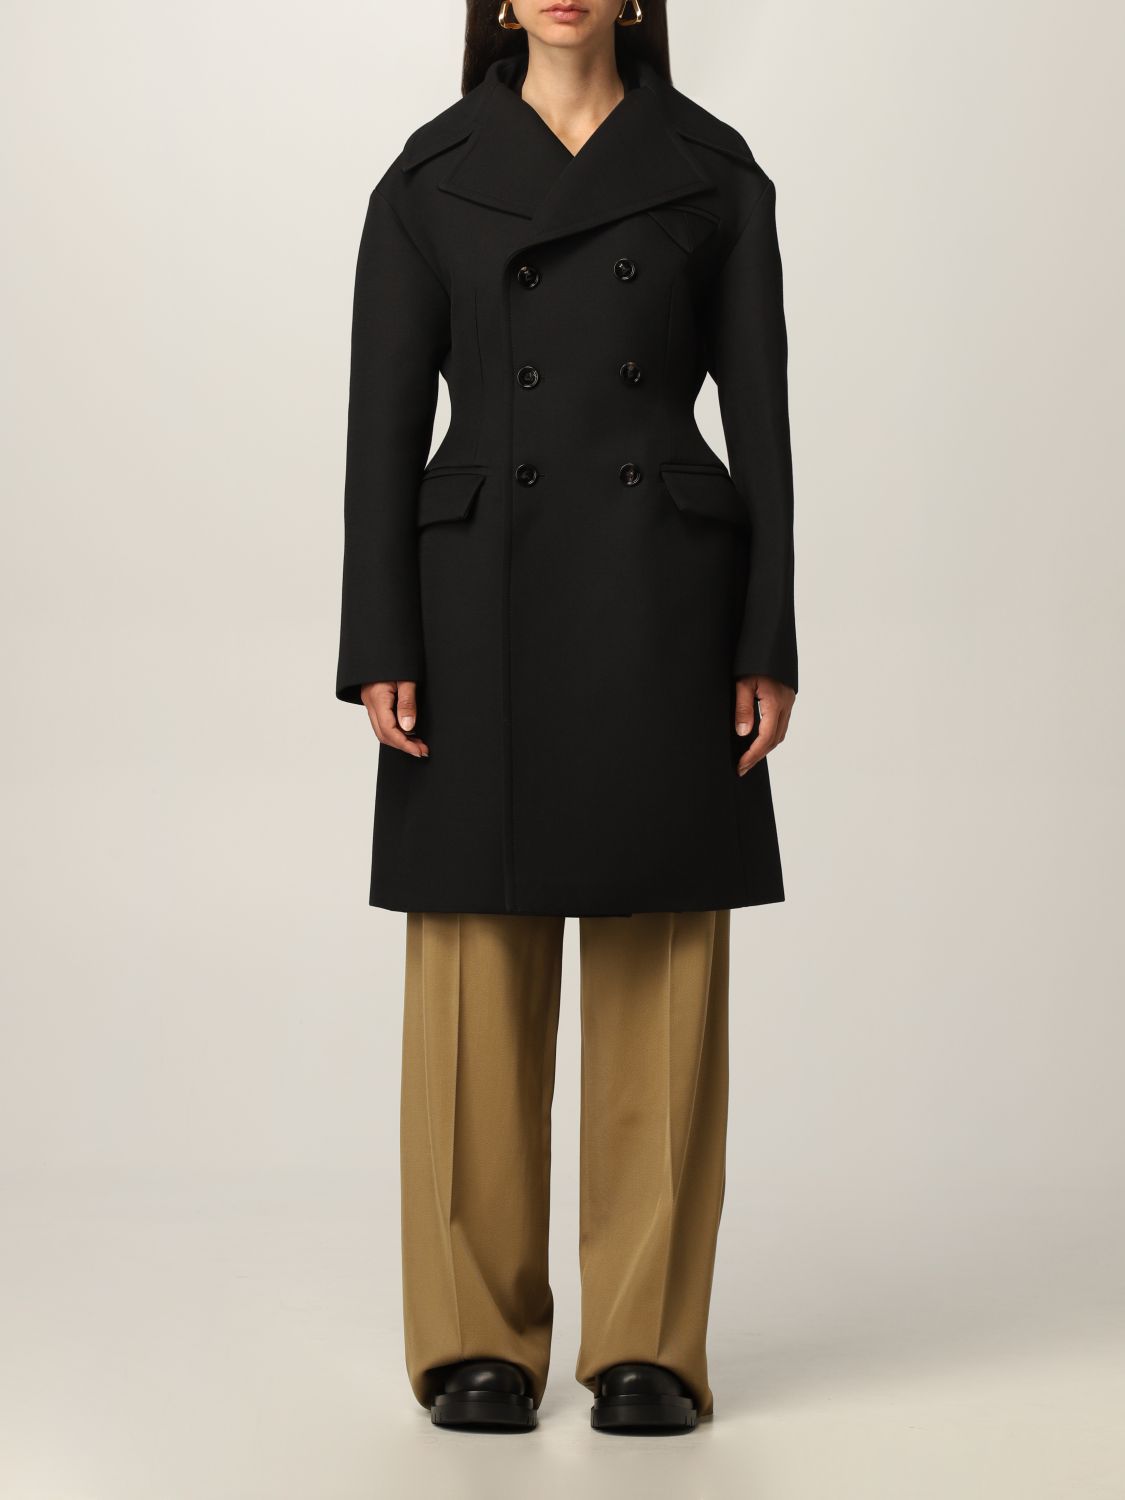 BOTTEGA VENETA: double-breasted coat in wool blend - Black | Bottega ...